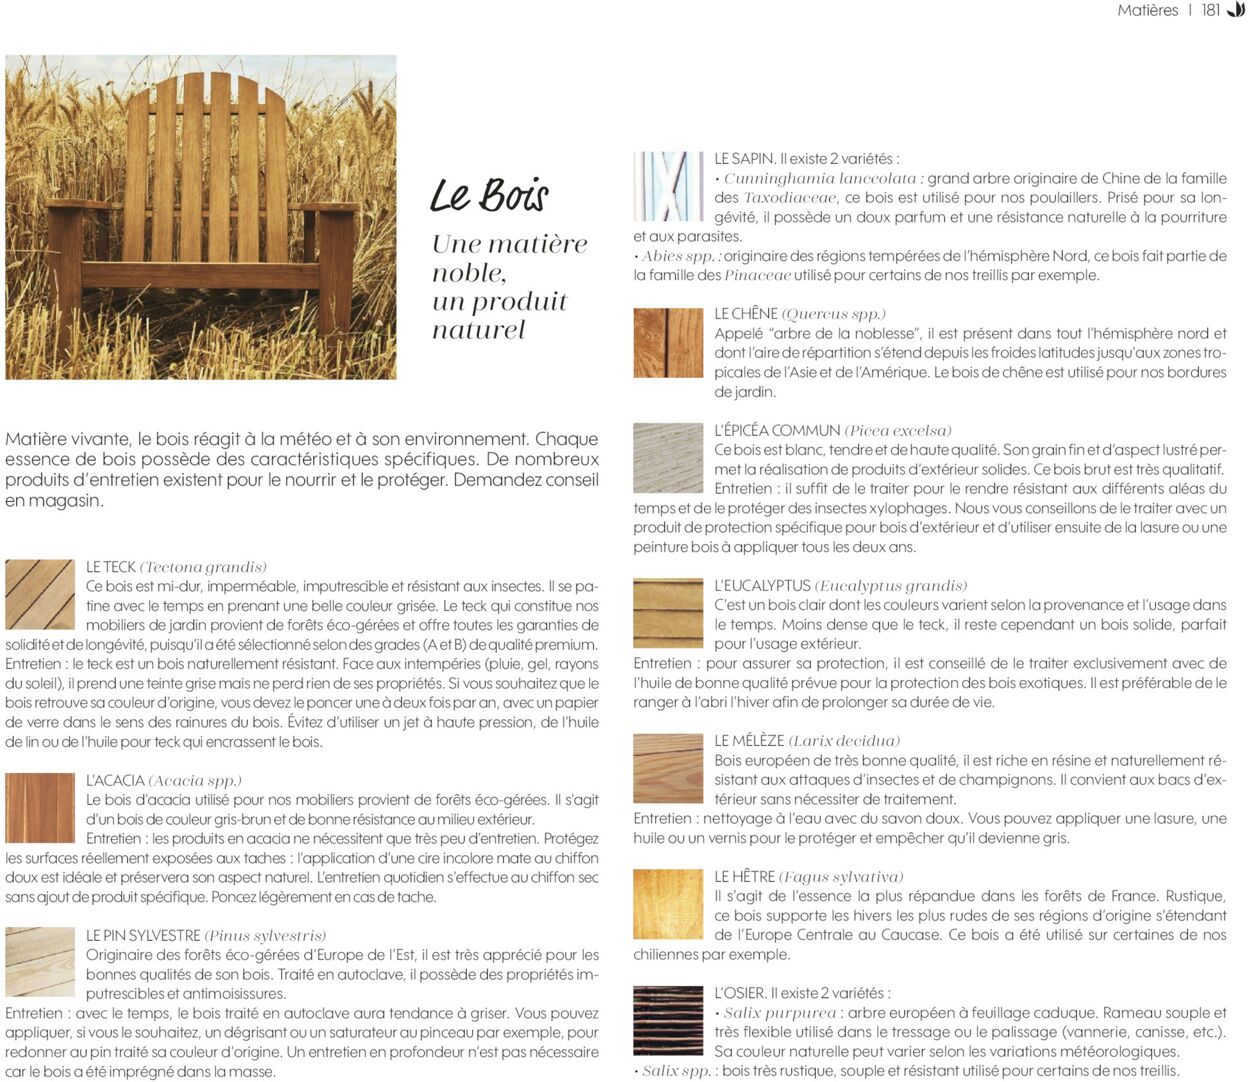 Catalogue Truffaut 15.04.2021 - 31.12.2021